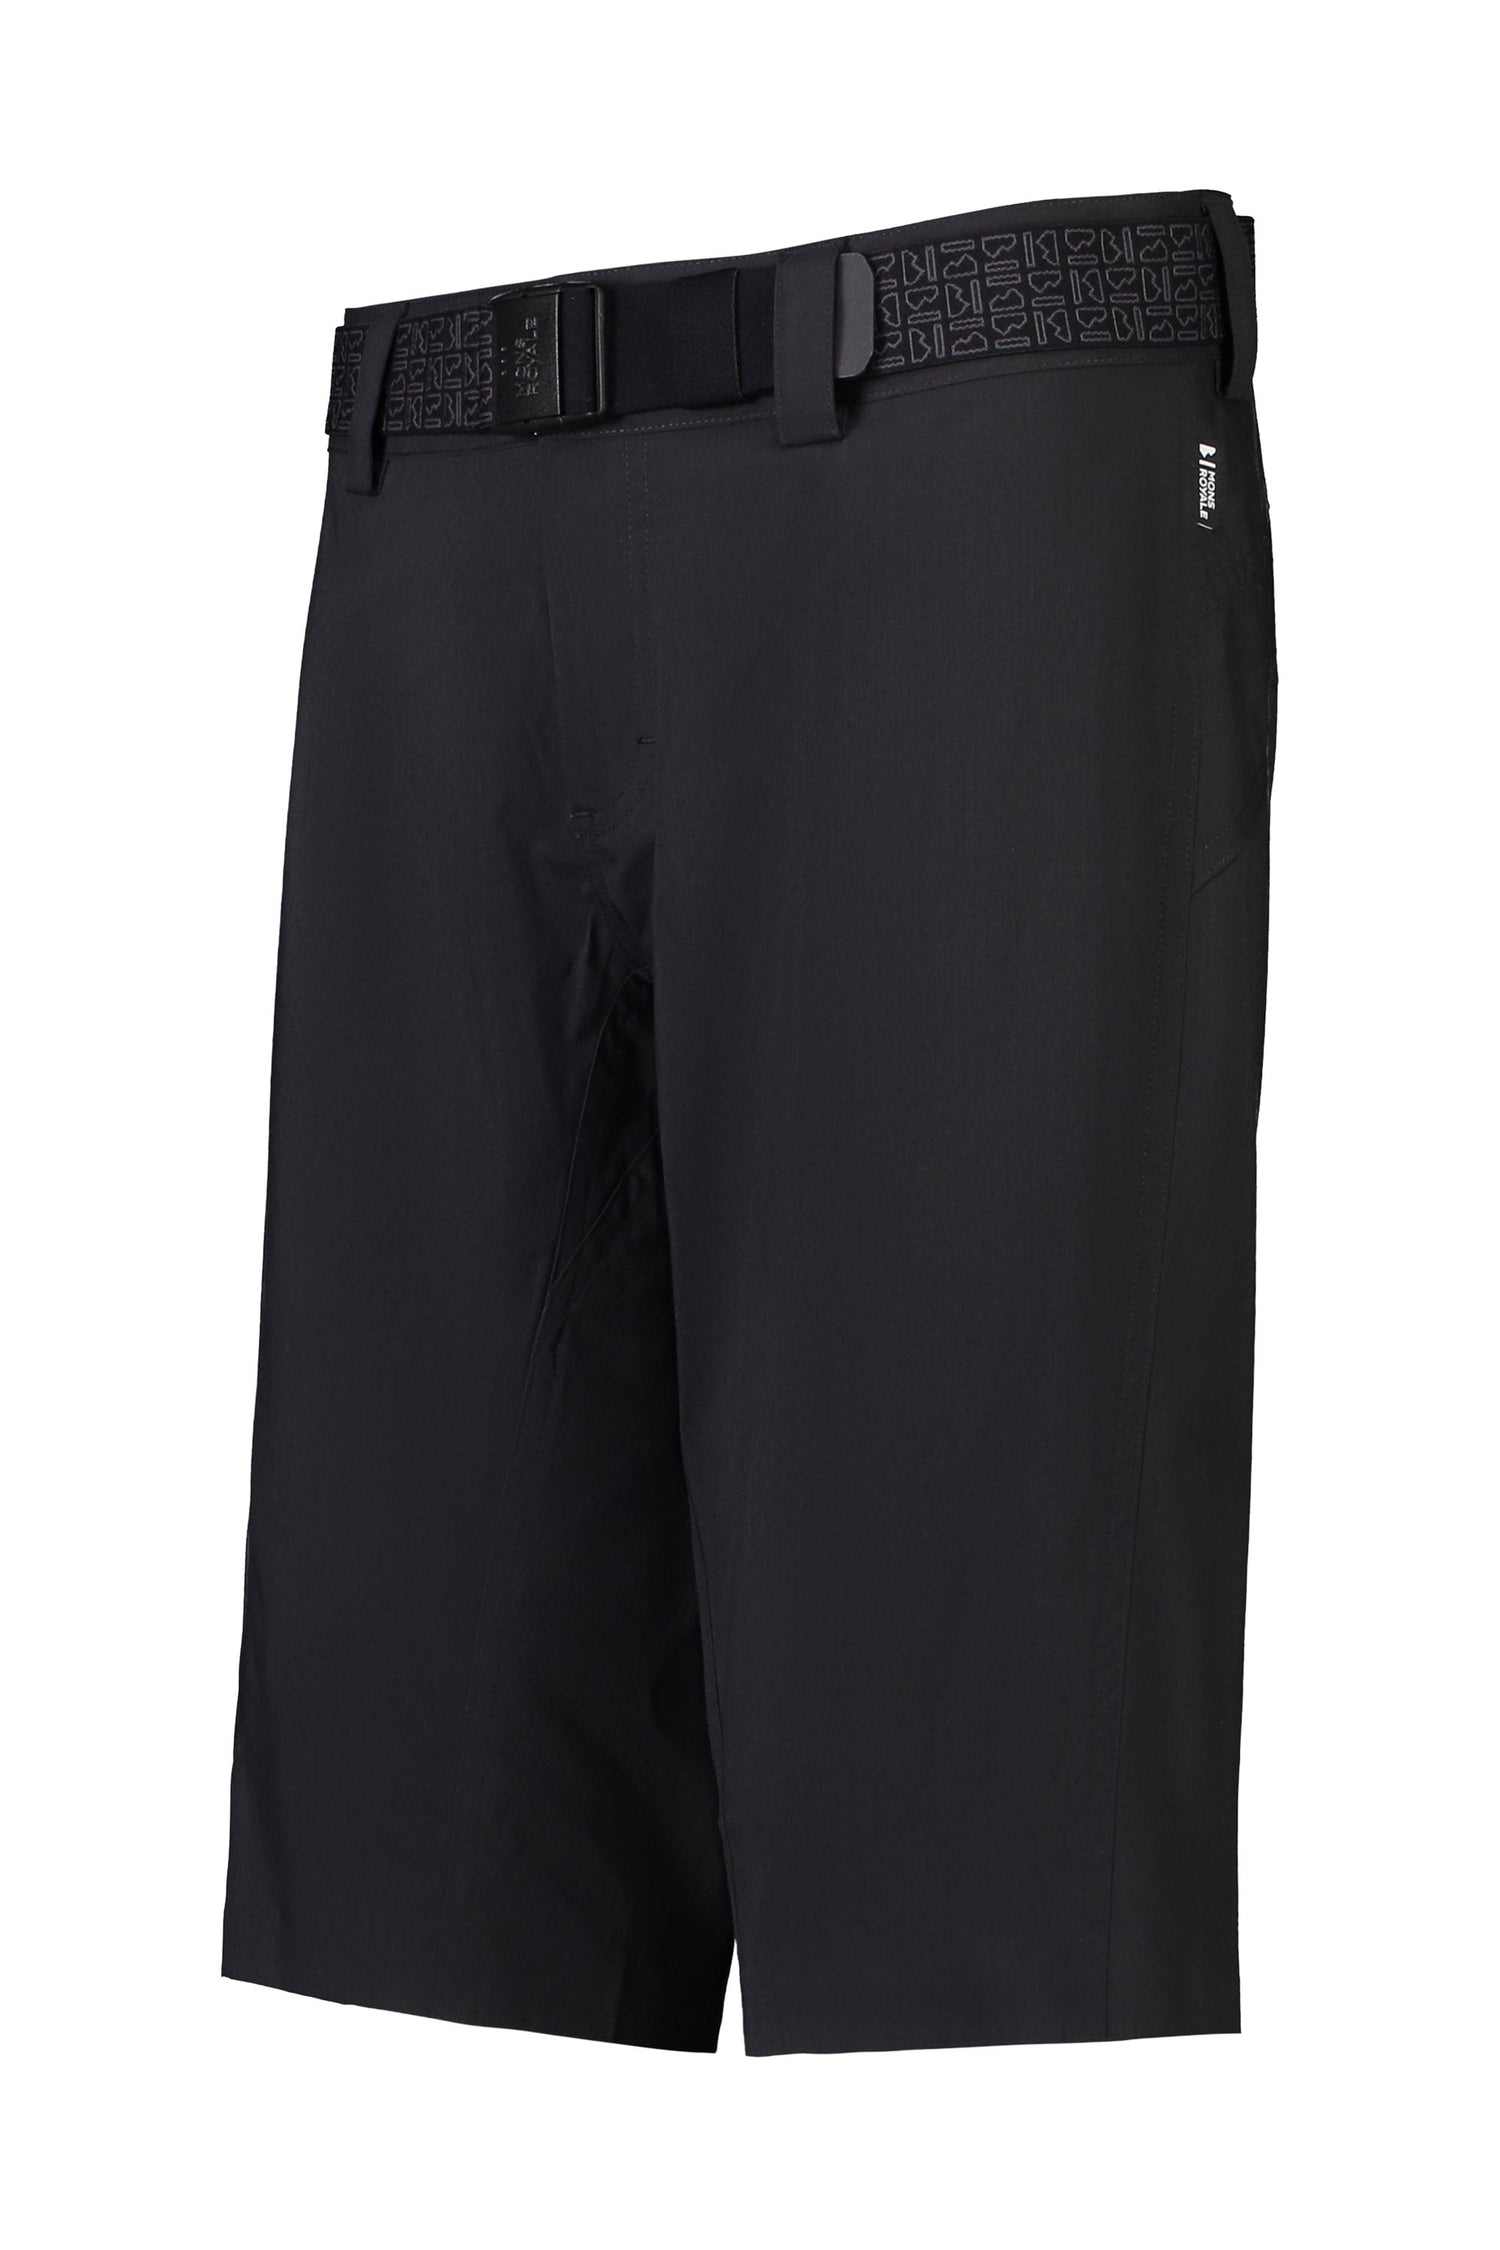 Mons Royale W's Virage Bike Shorts - Recycled Polyester & Merino Black Pants